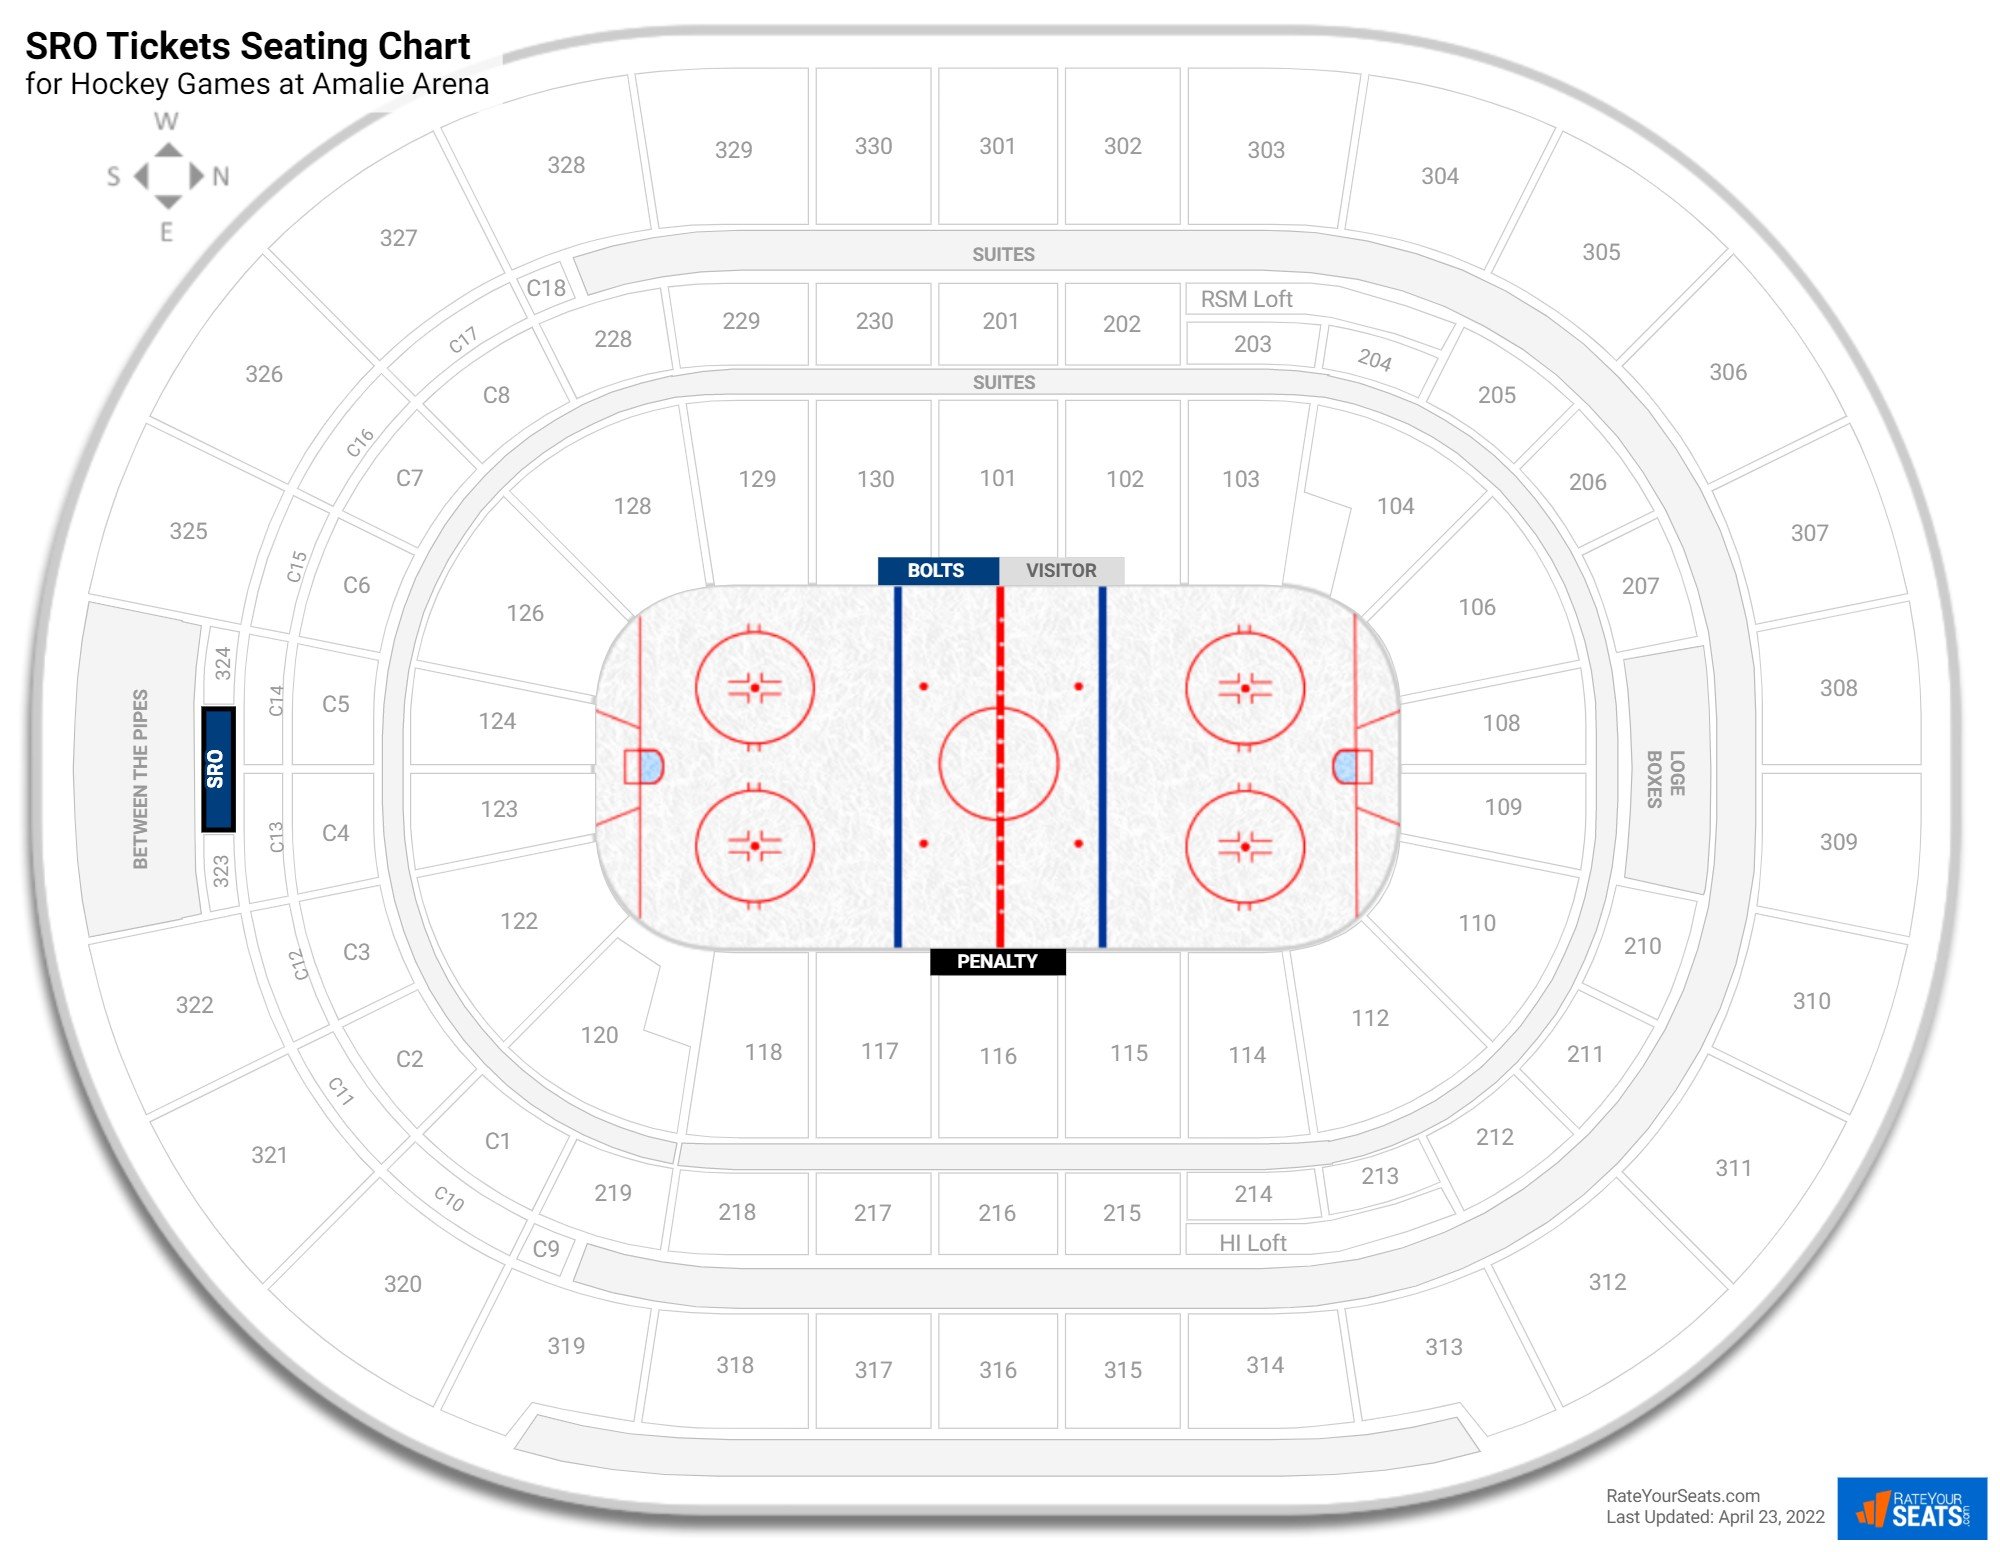 Hockey SRO Tickets Seating Chart at Amalie Arena